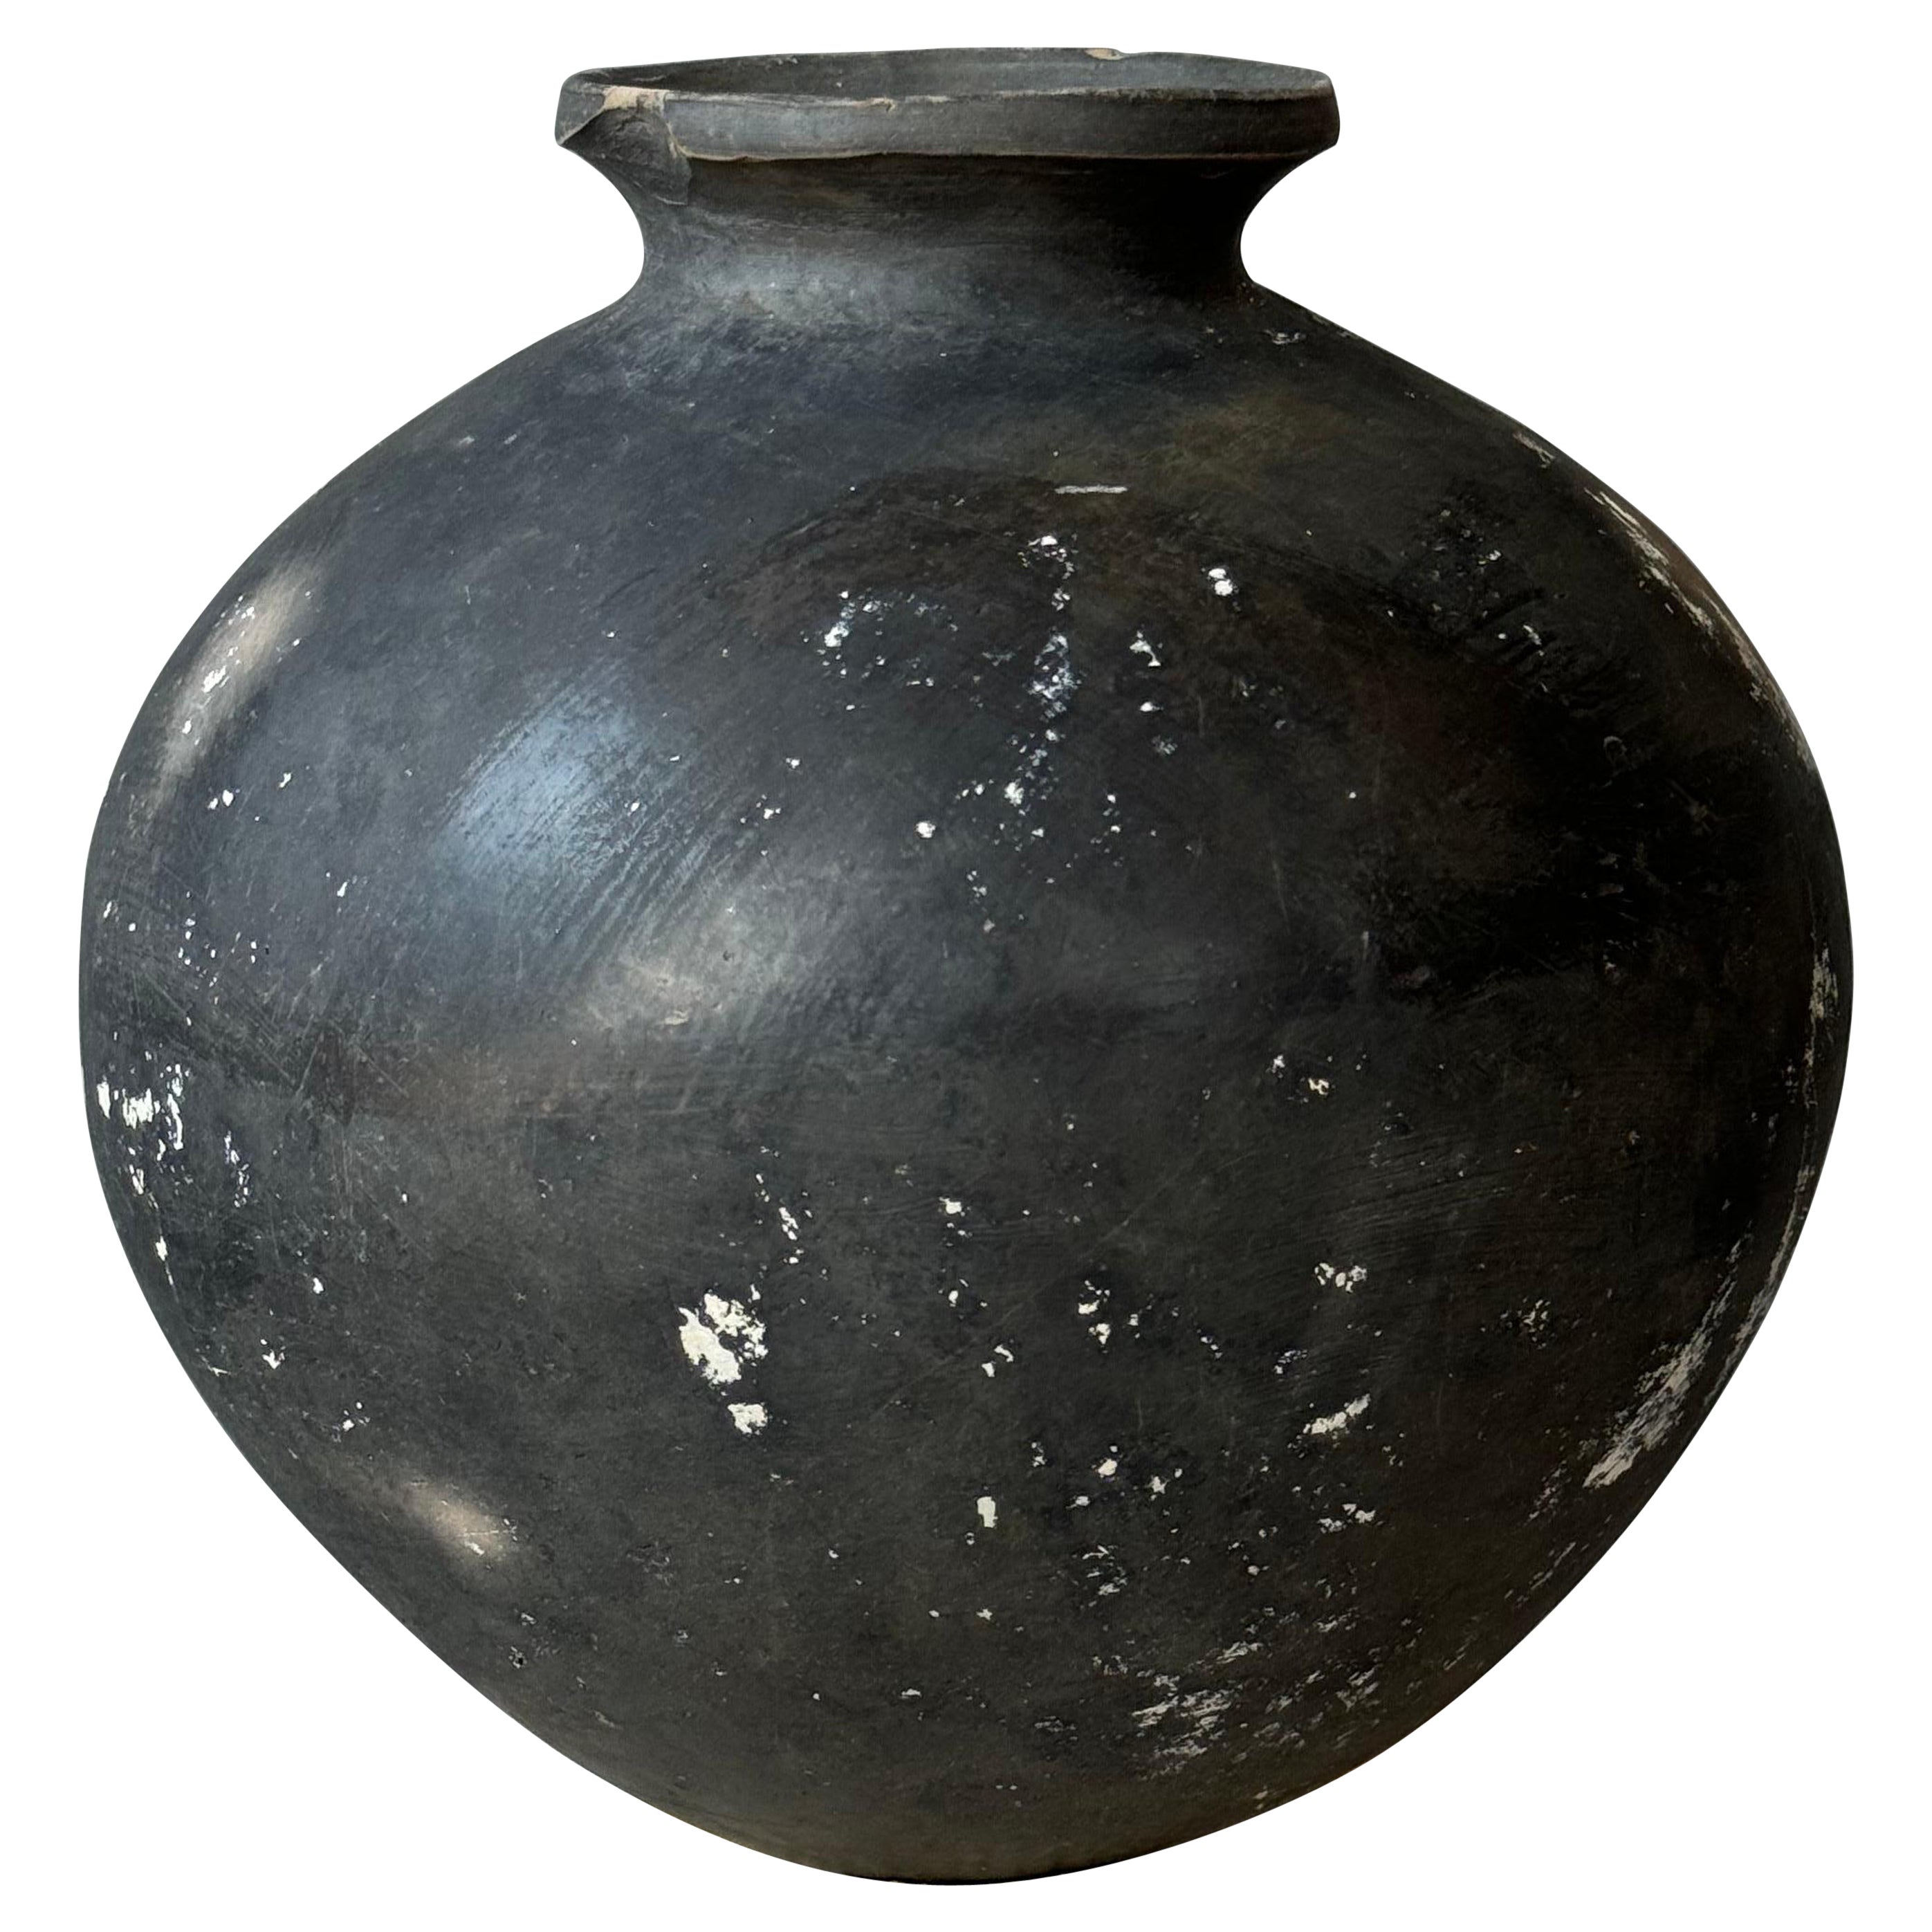 Is black clay earthenware?